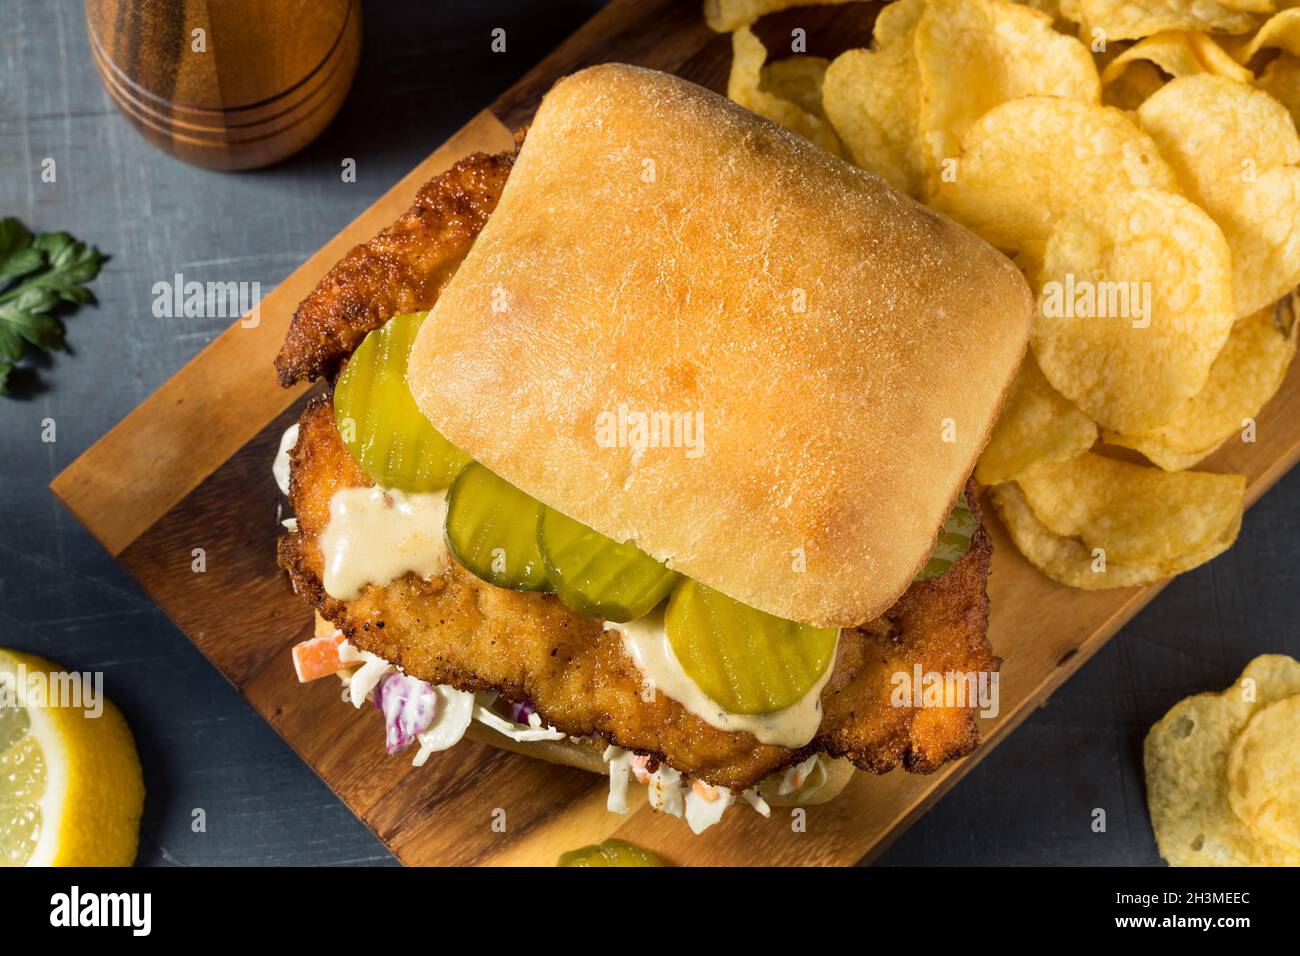 Homemade German Chicken Schnitzel Sandwich with Chips Stock Photo